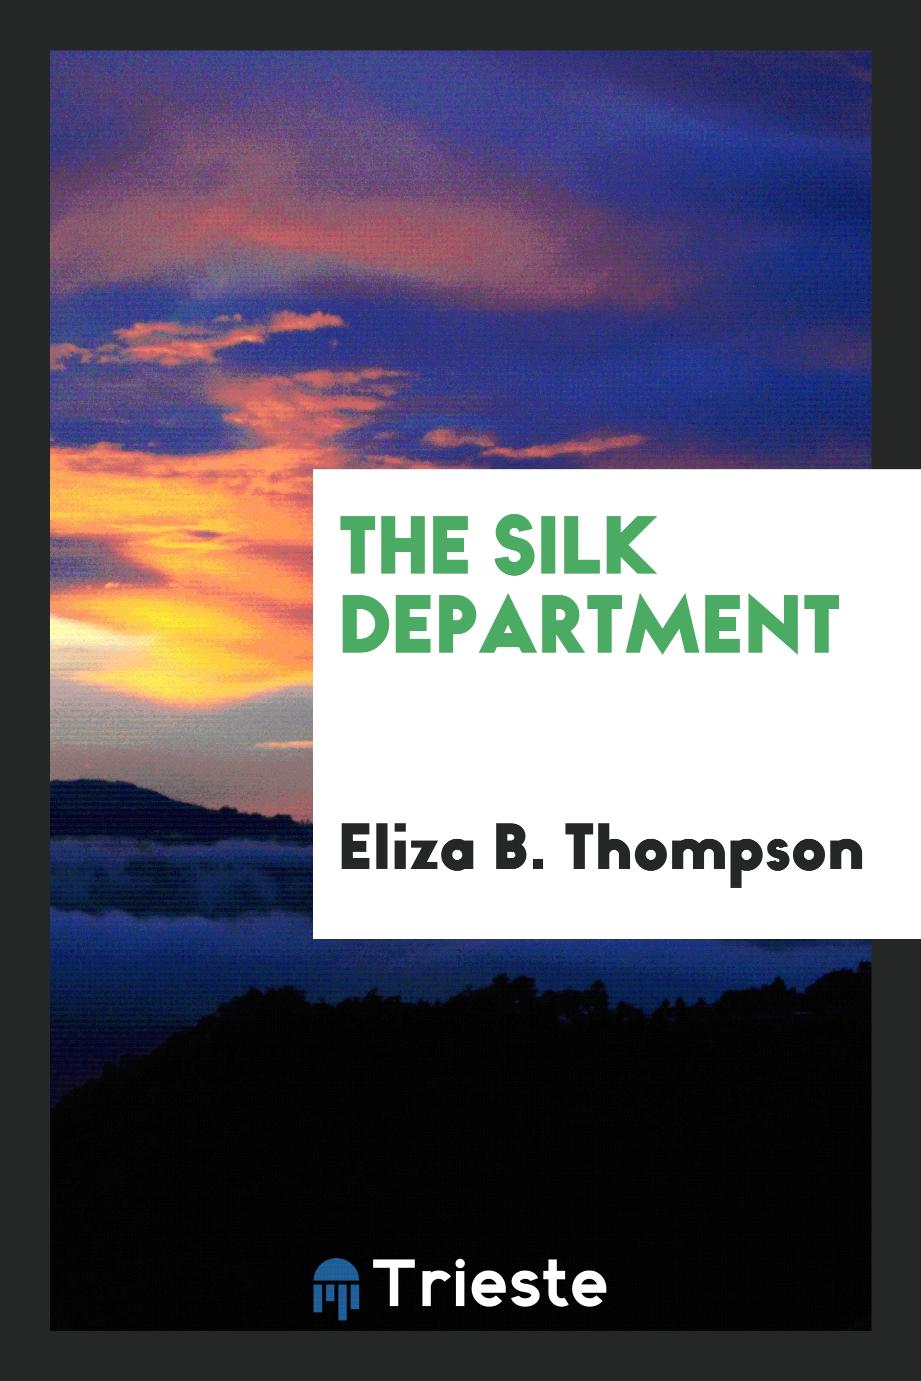 The silk department